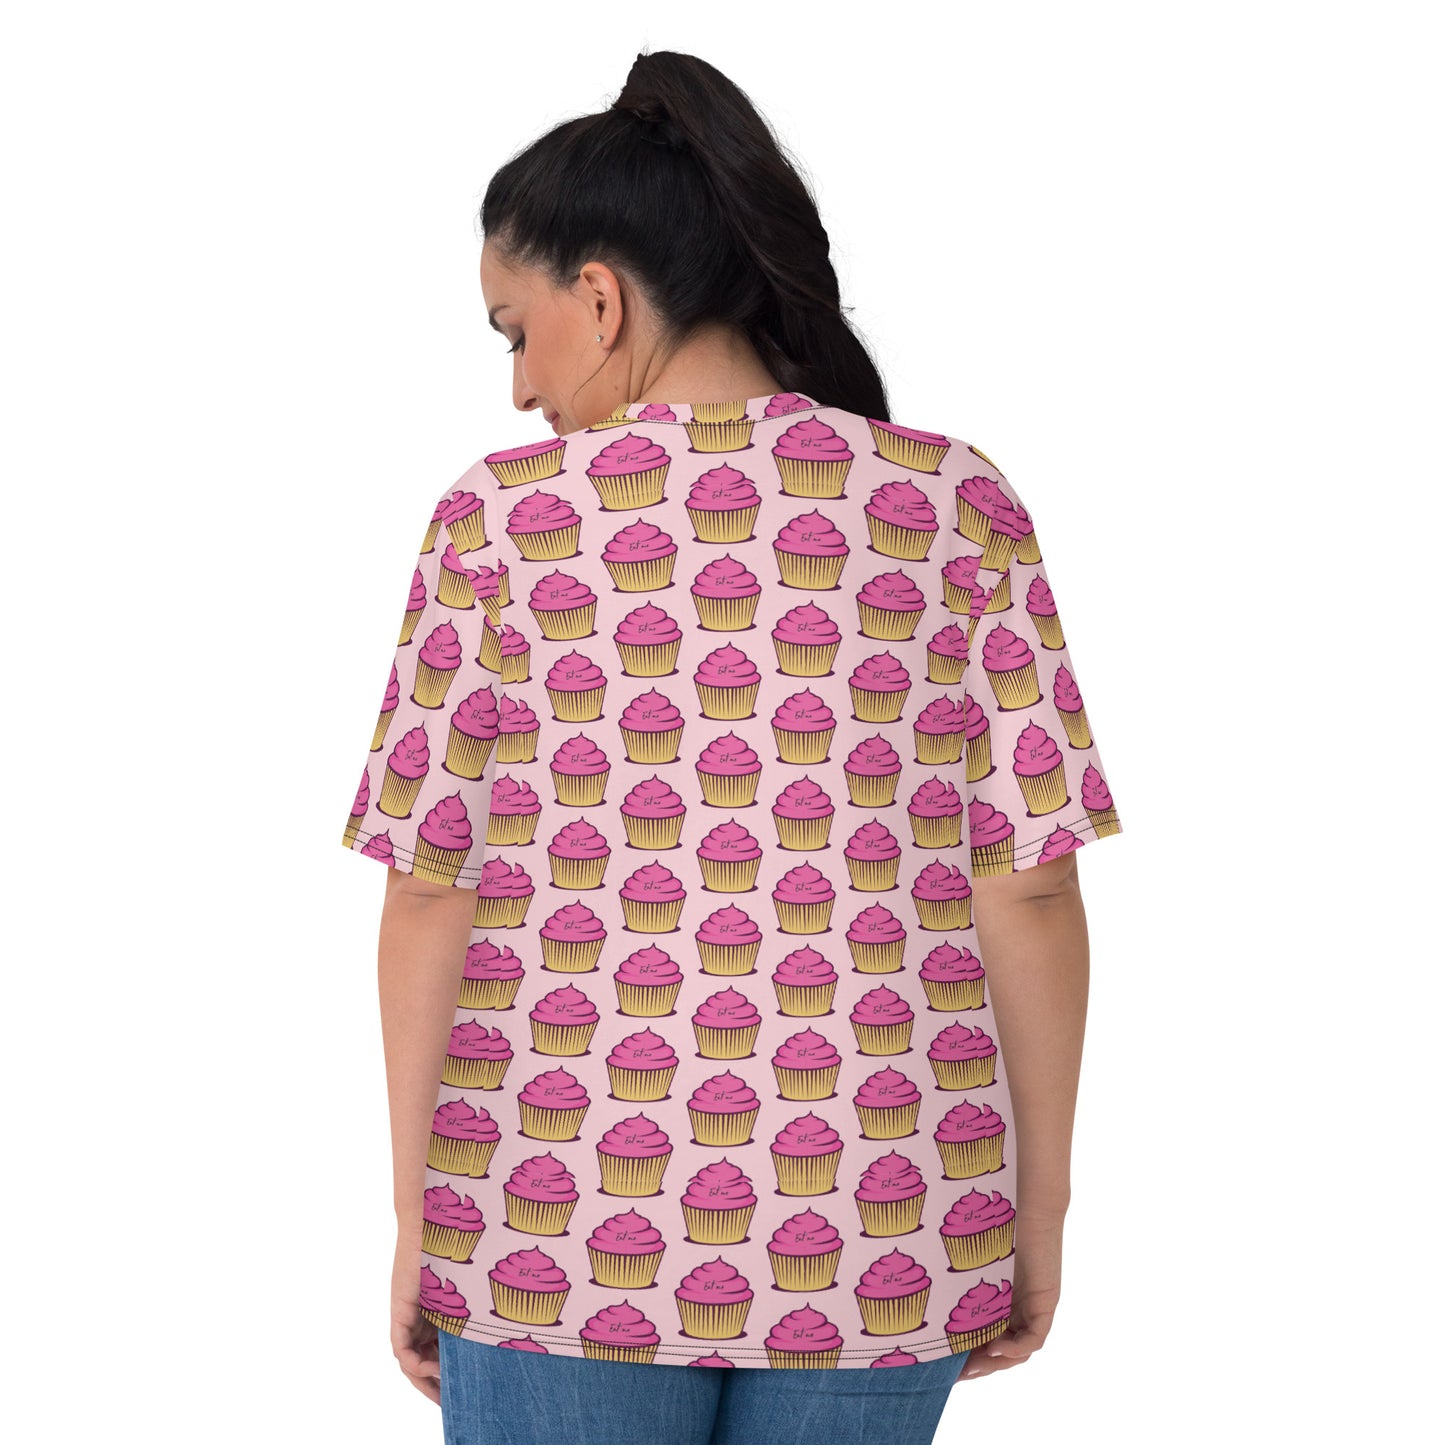 Cupcake love Women's T-shirt